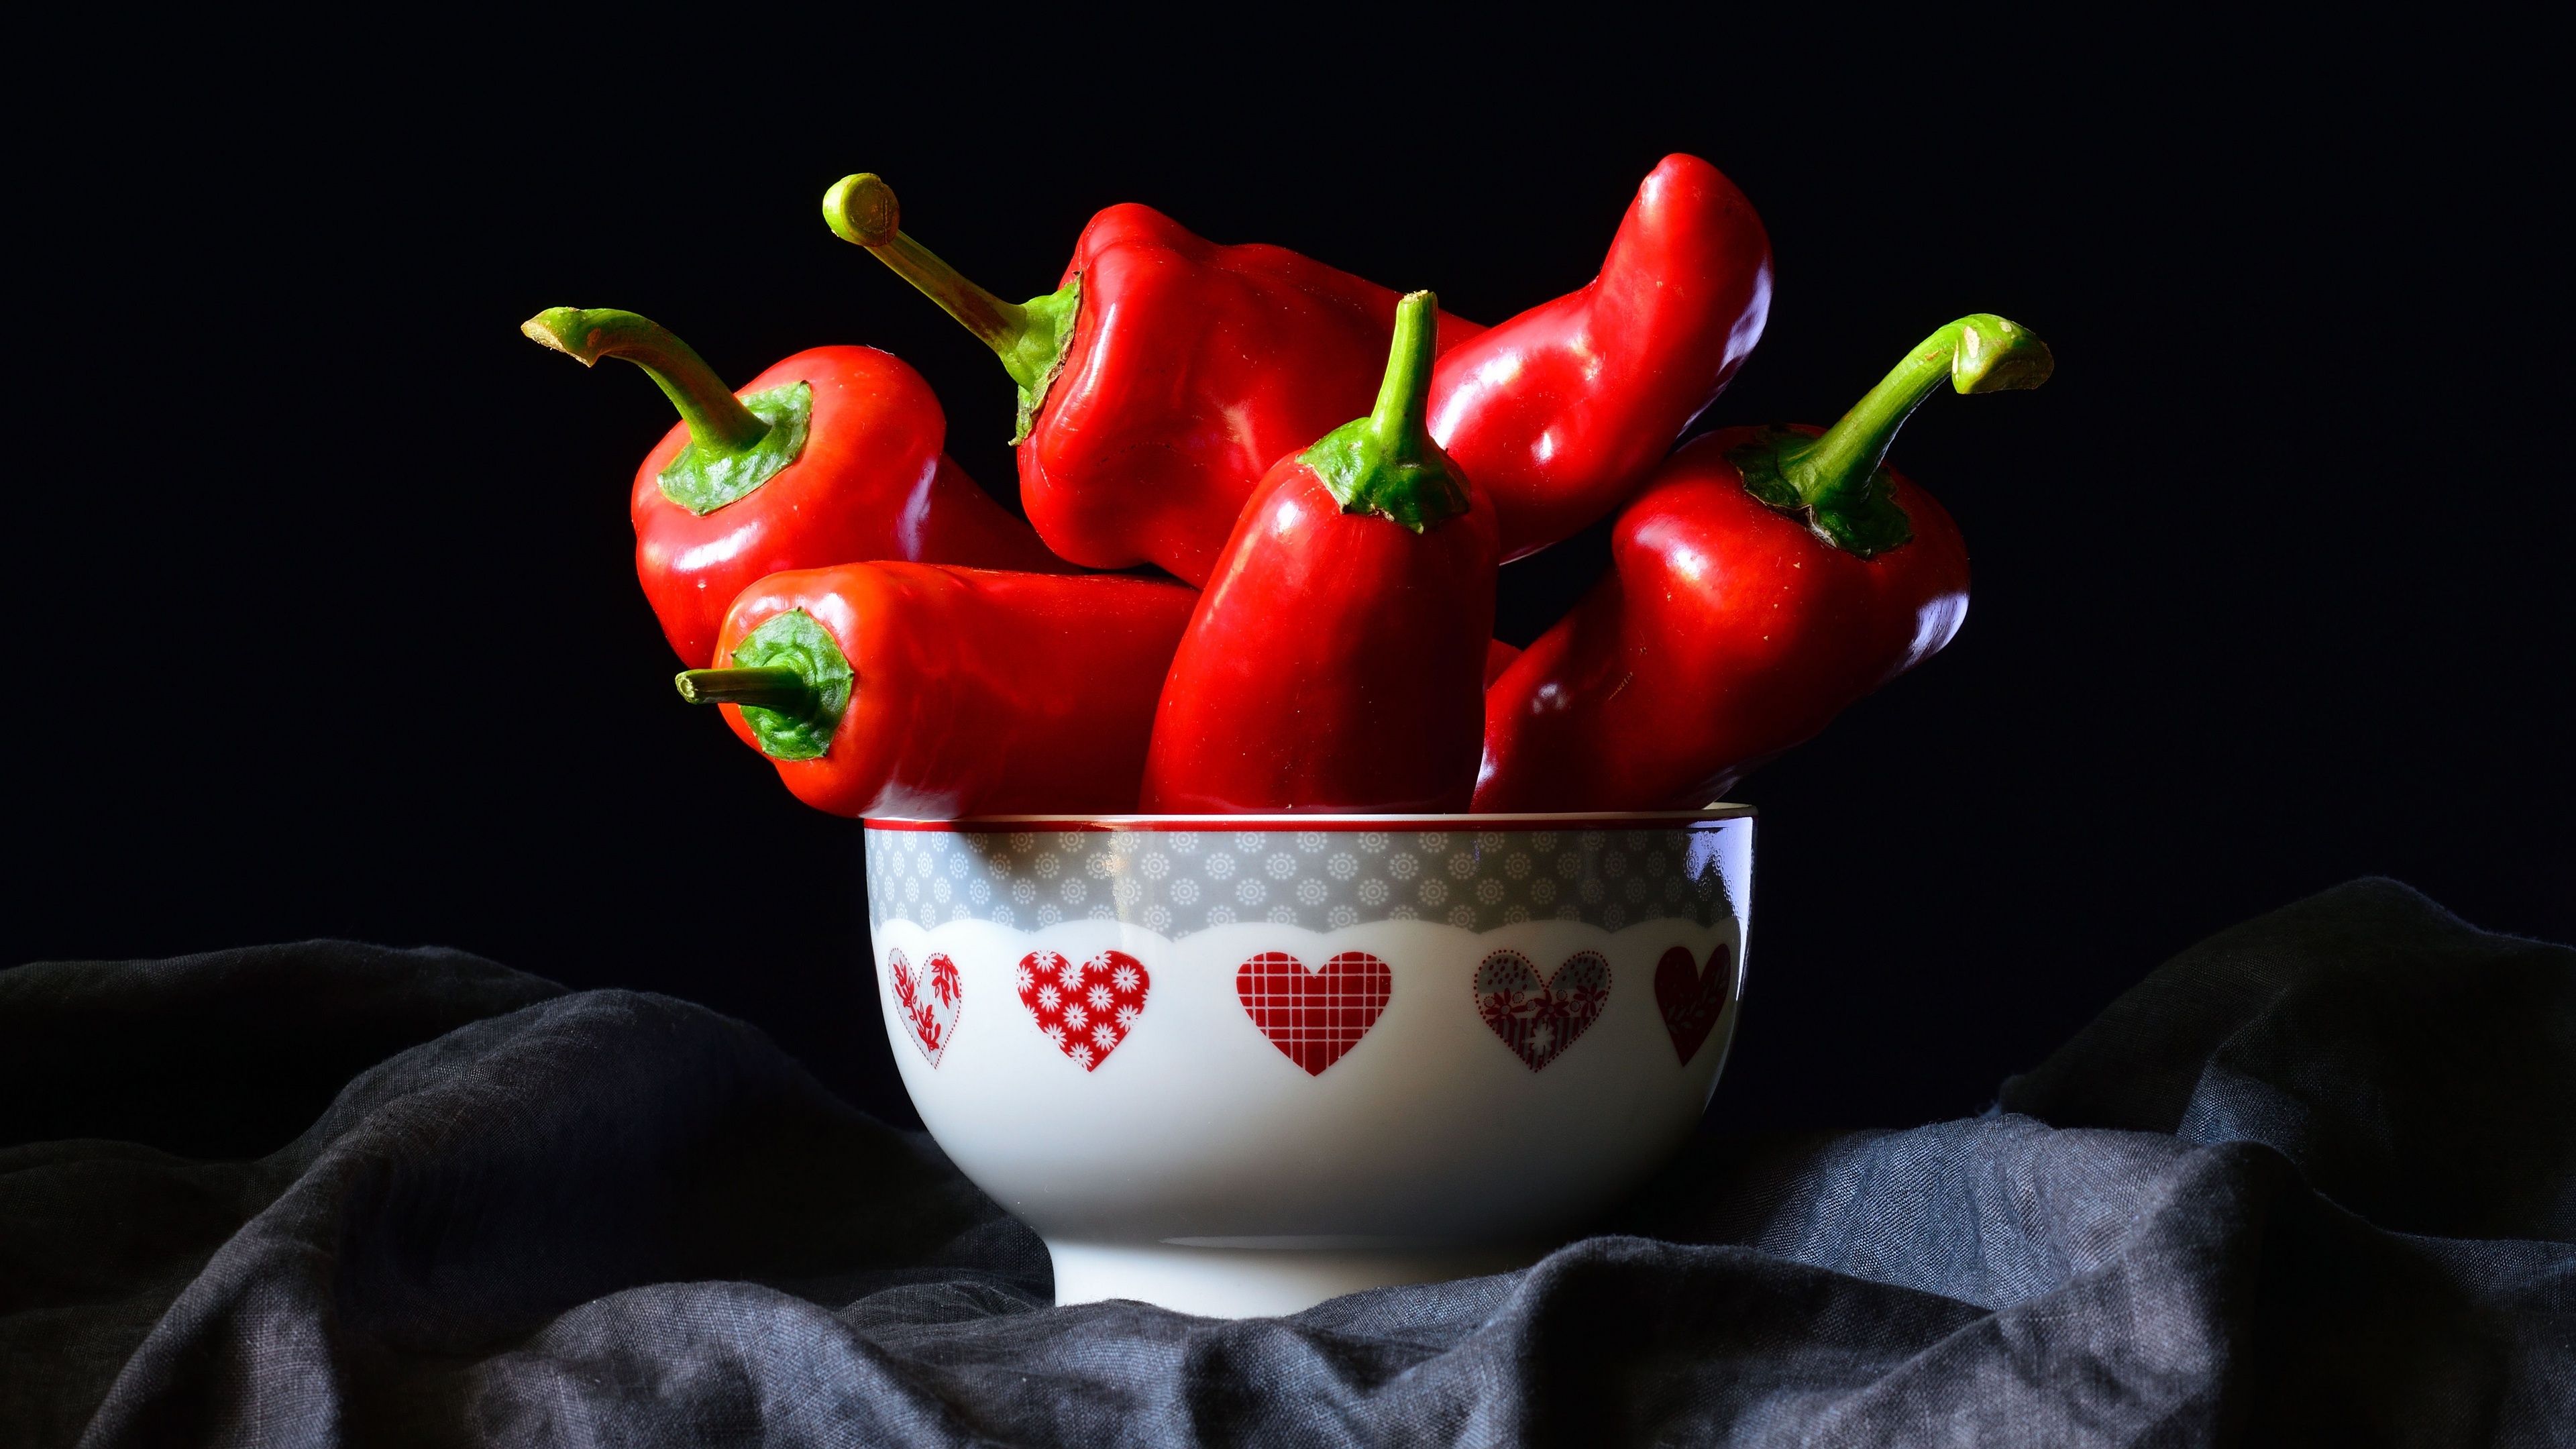 Pepper spice delight, Ultra HD wallpaper, Warm and inviting, Aroma sensation, 3840x2160 4K Desktop